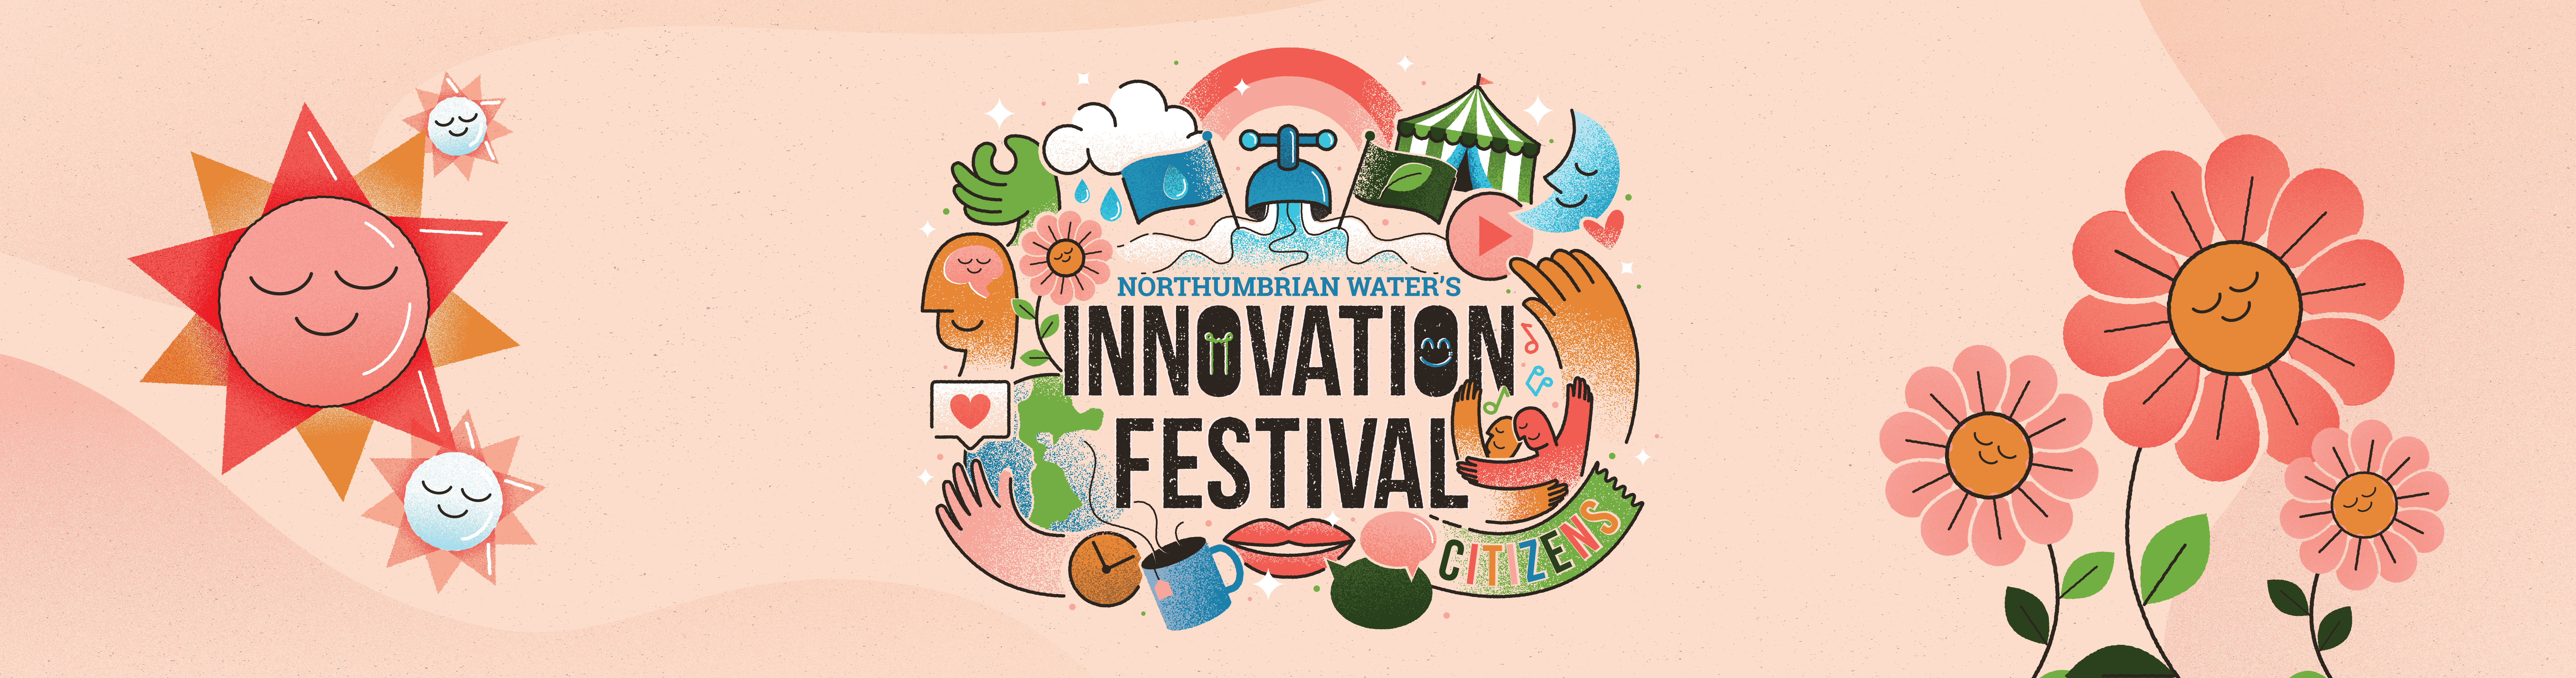 Innovation Festival logo centred